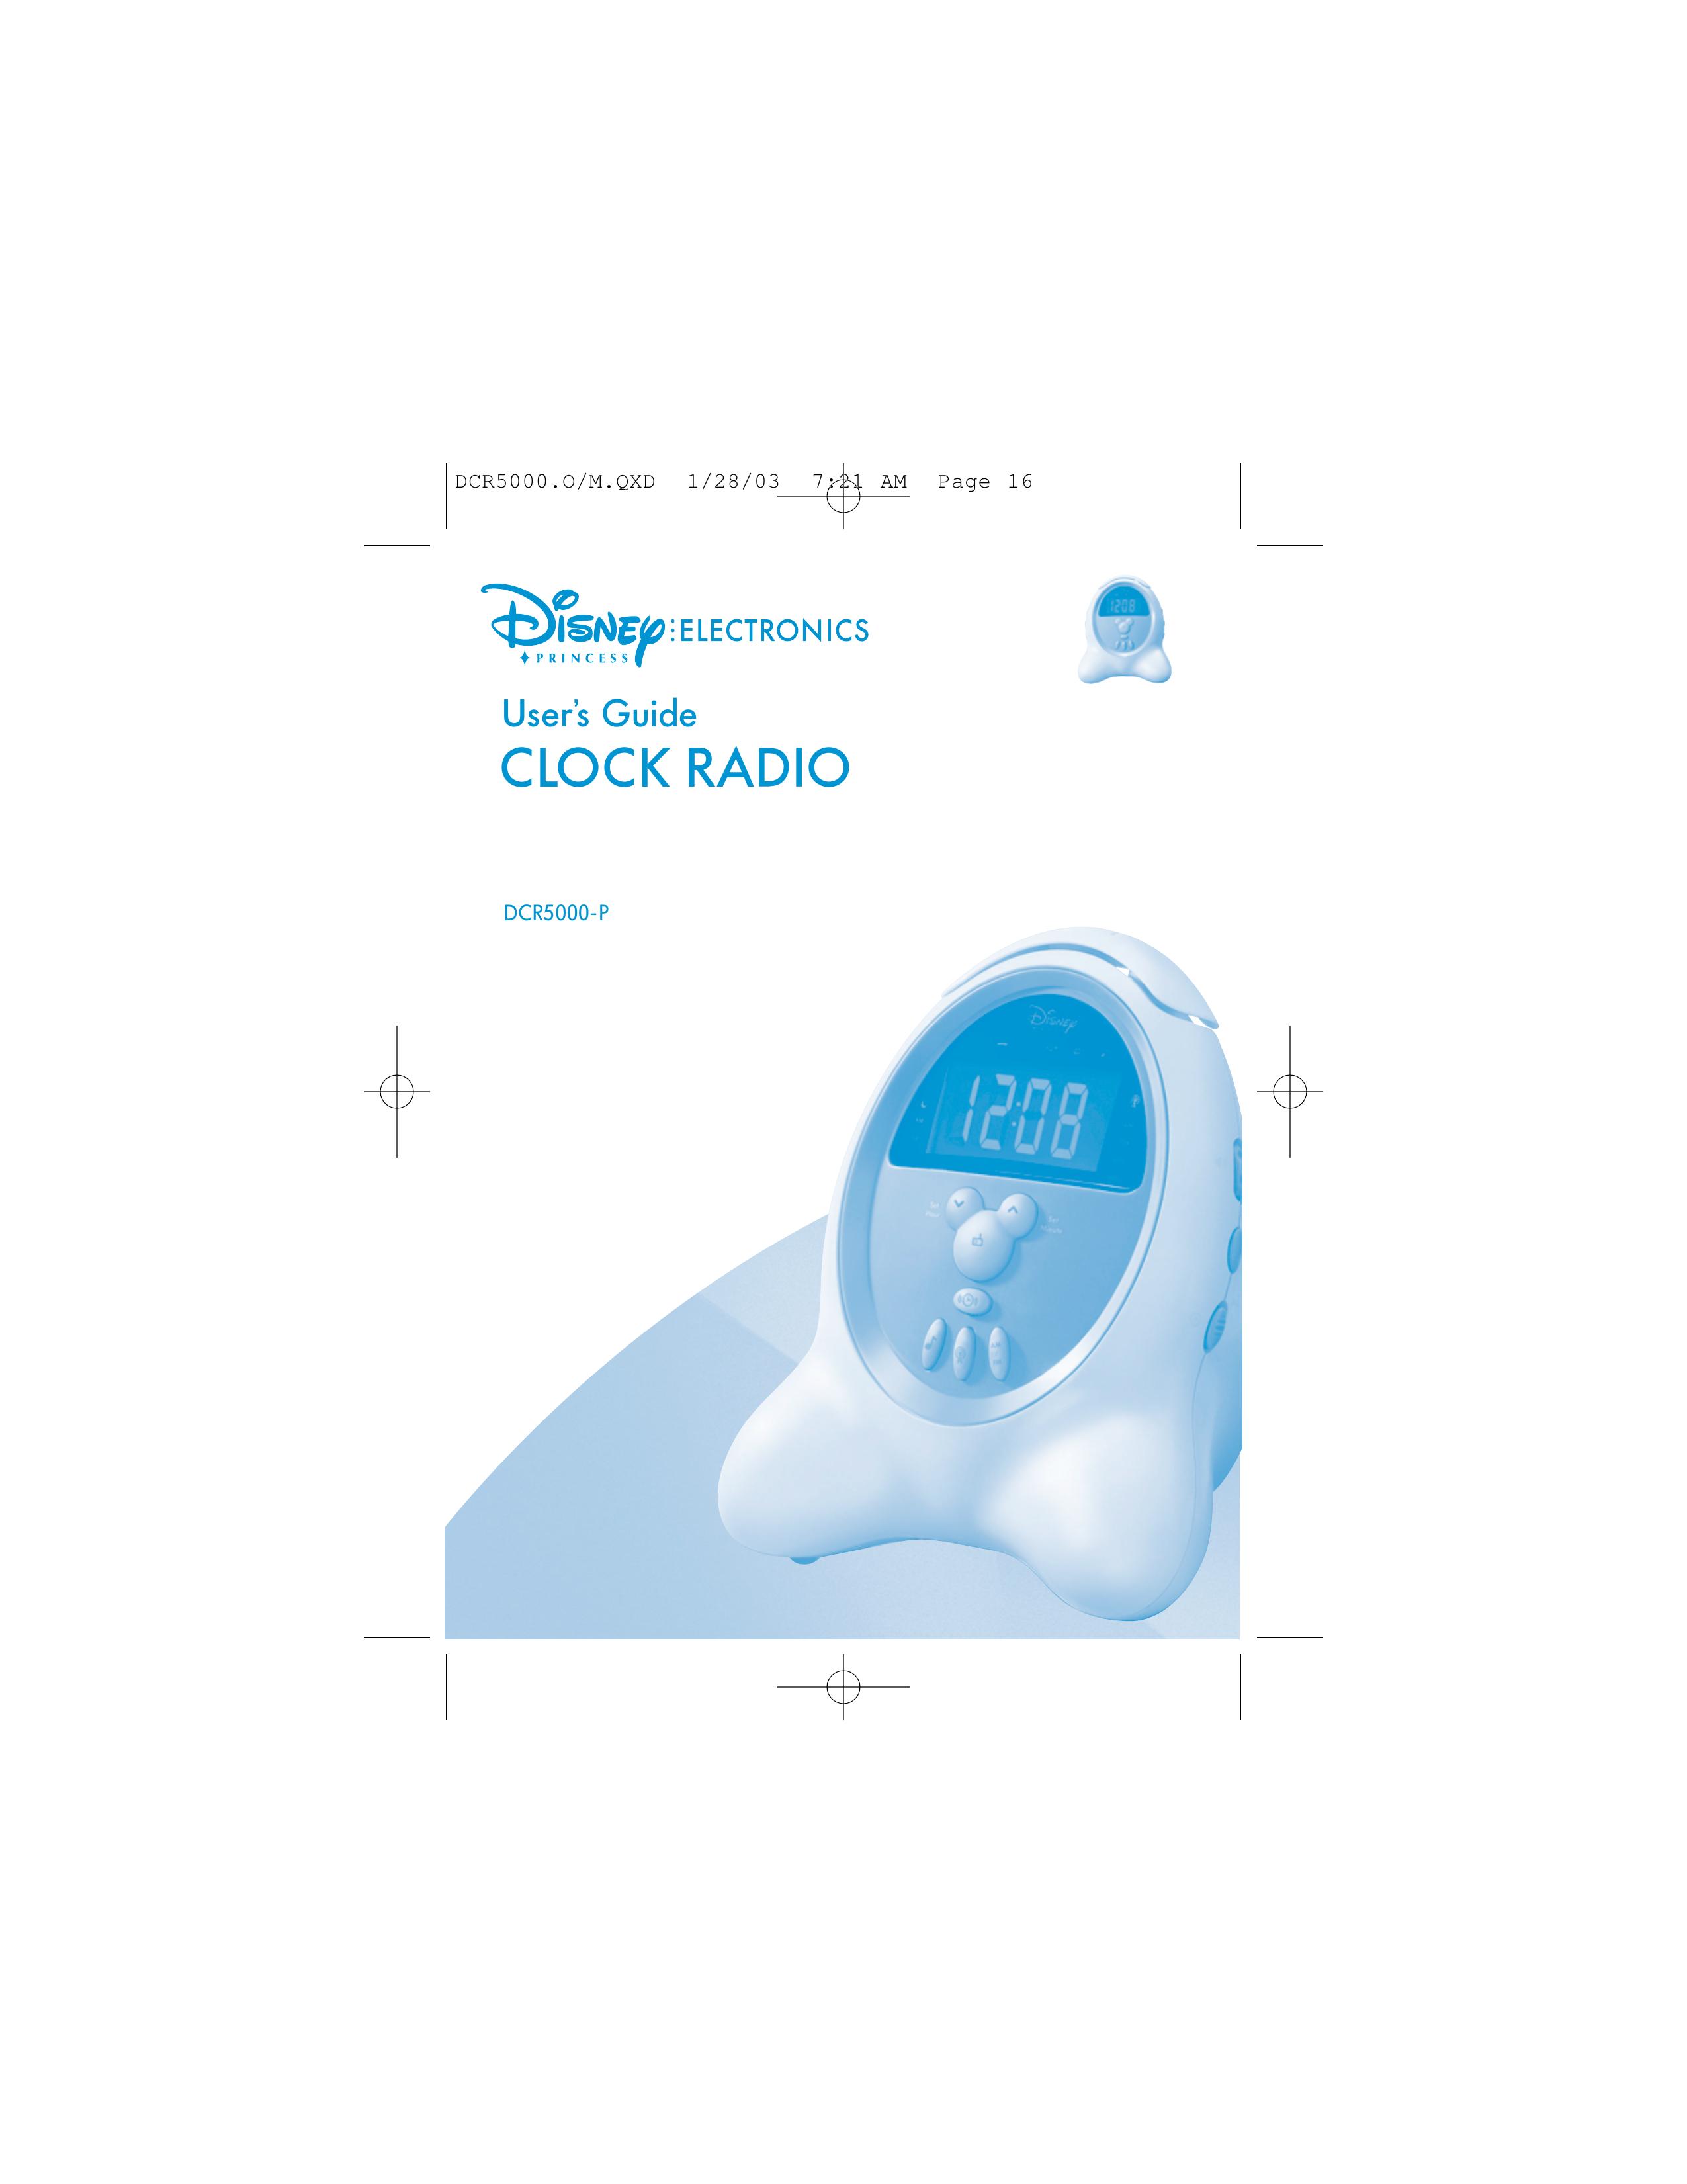 Disney DCR5000-P Clock Radio User Manual